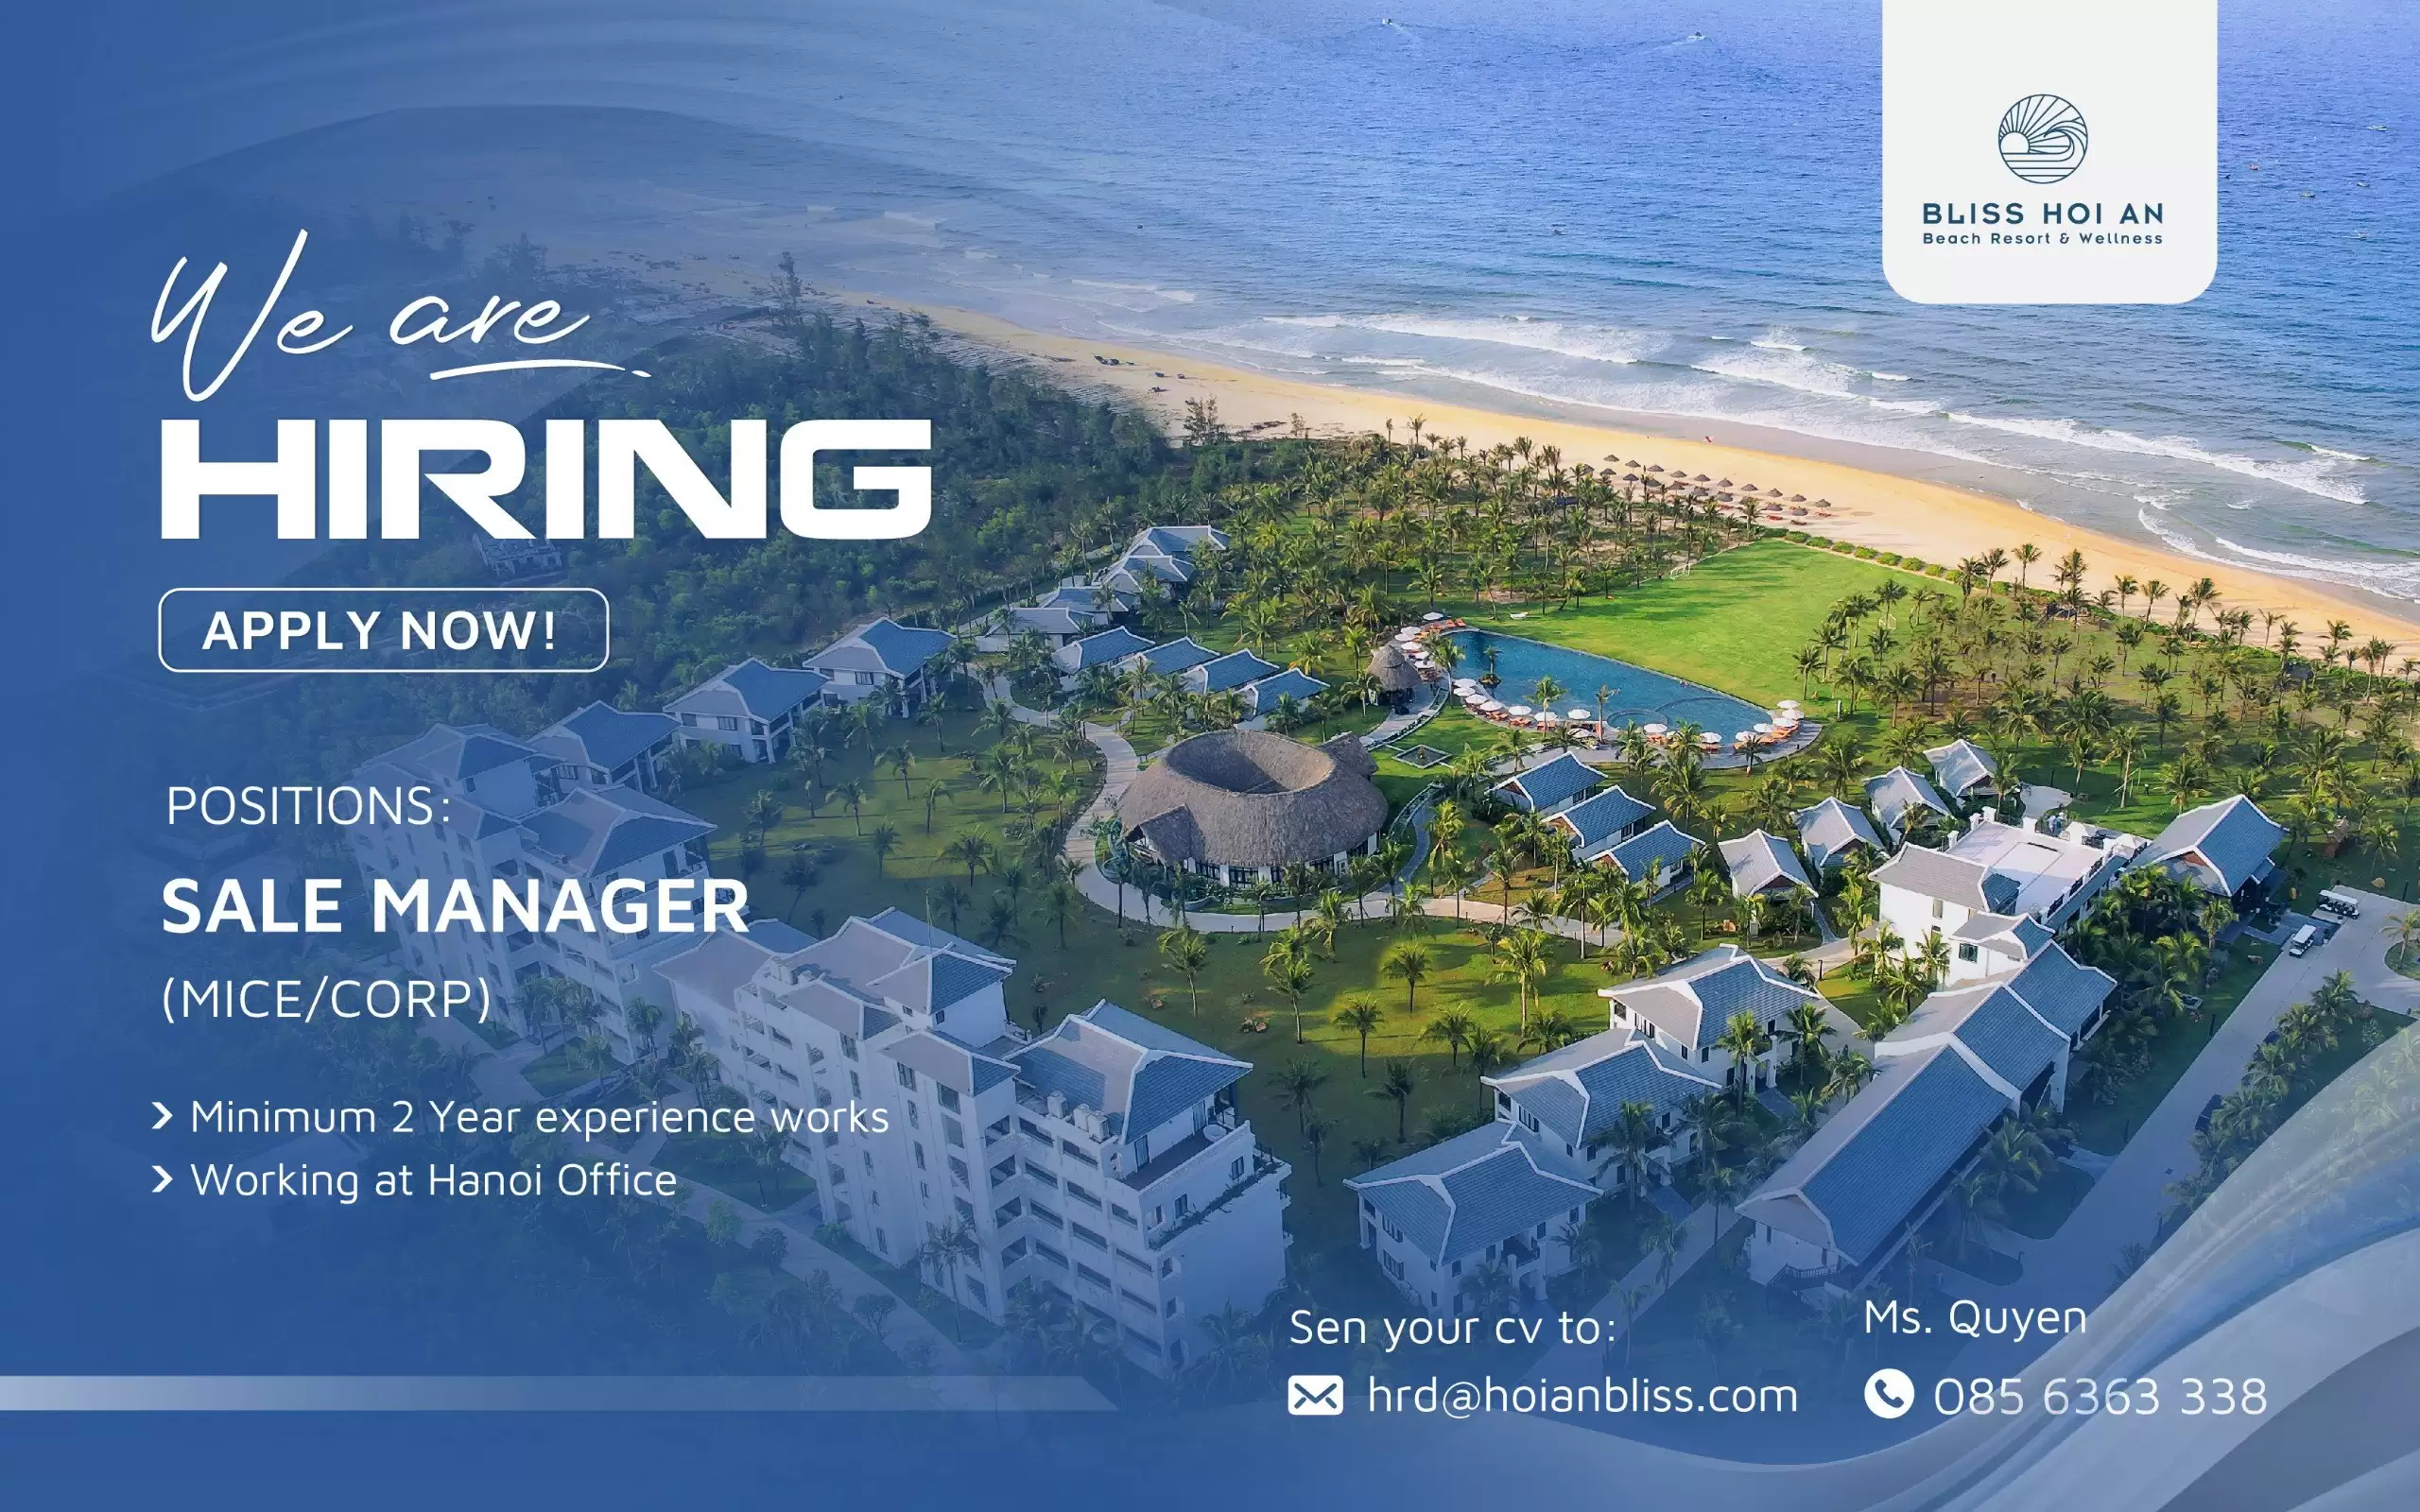 Bliss Hội An Beach Wellness & Resort tuyển dụng Sales Manager (Mice/corp)